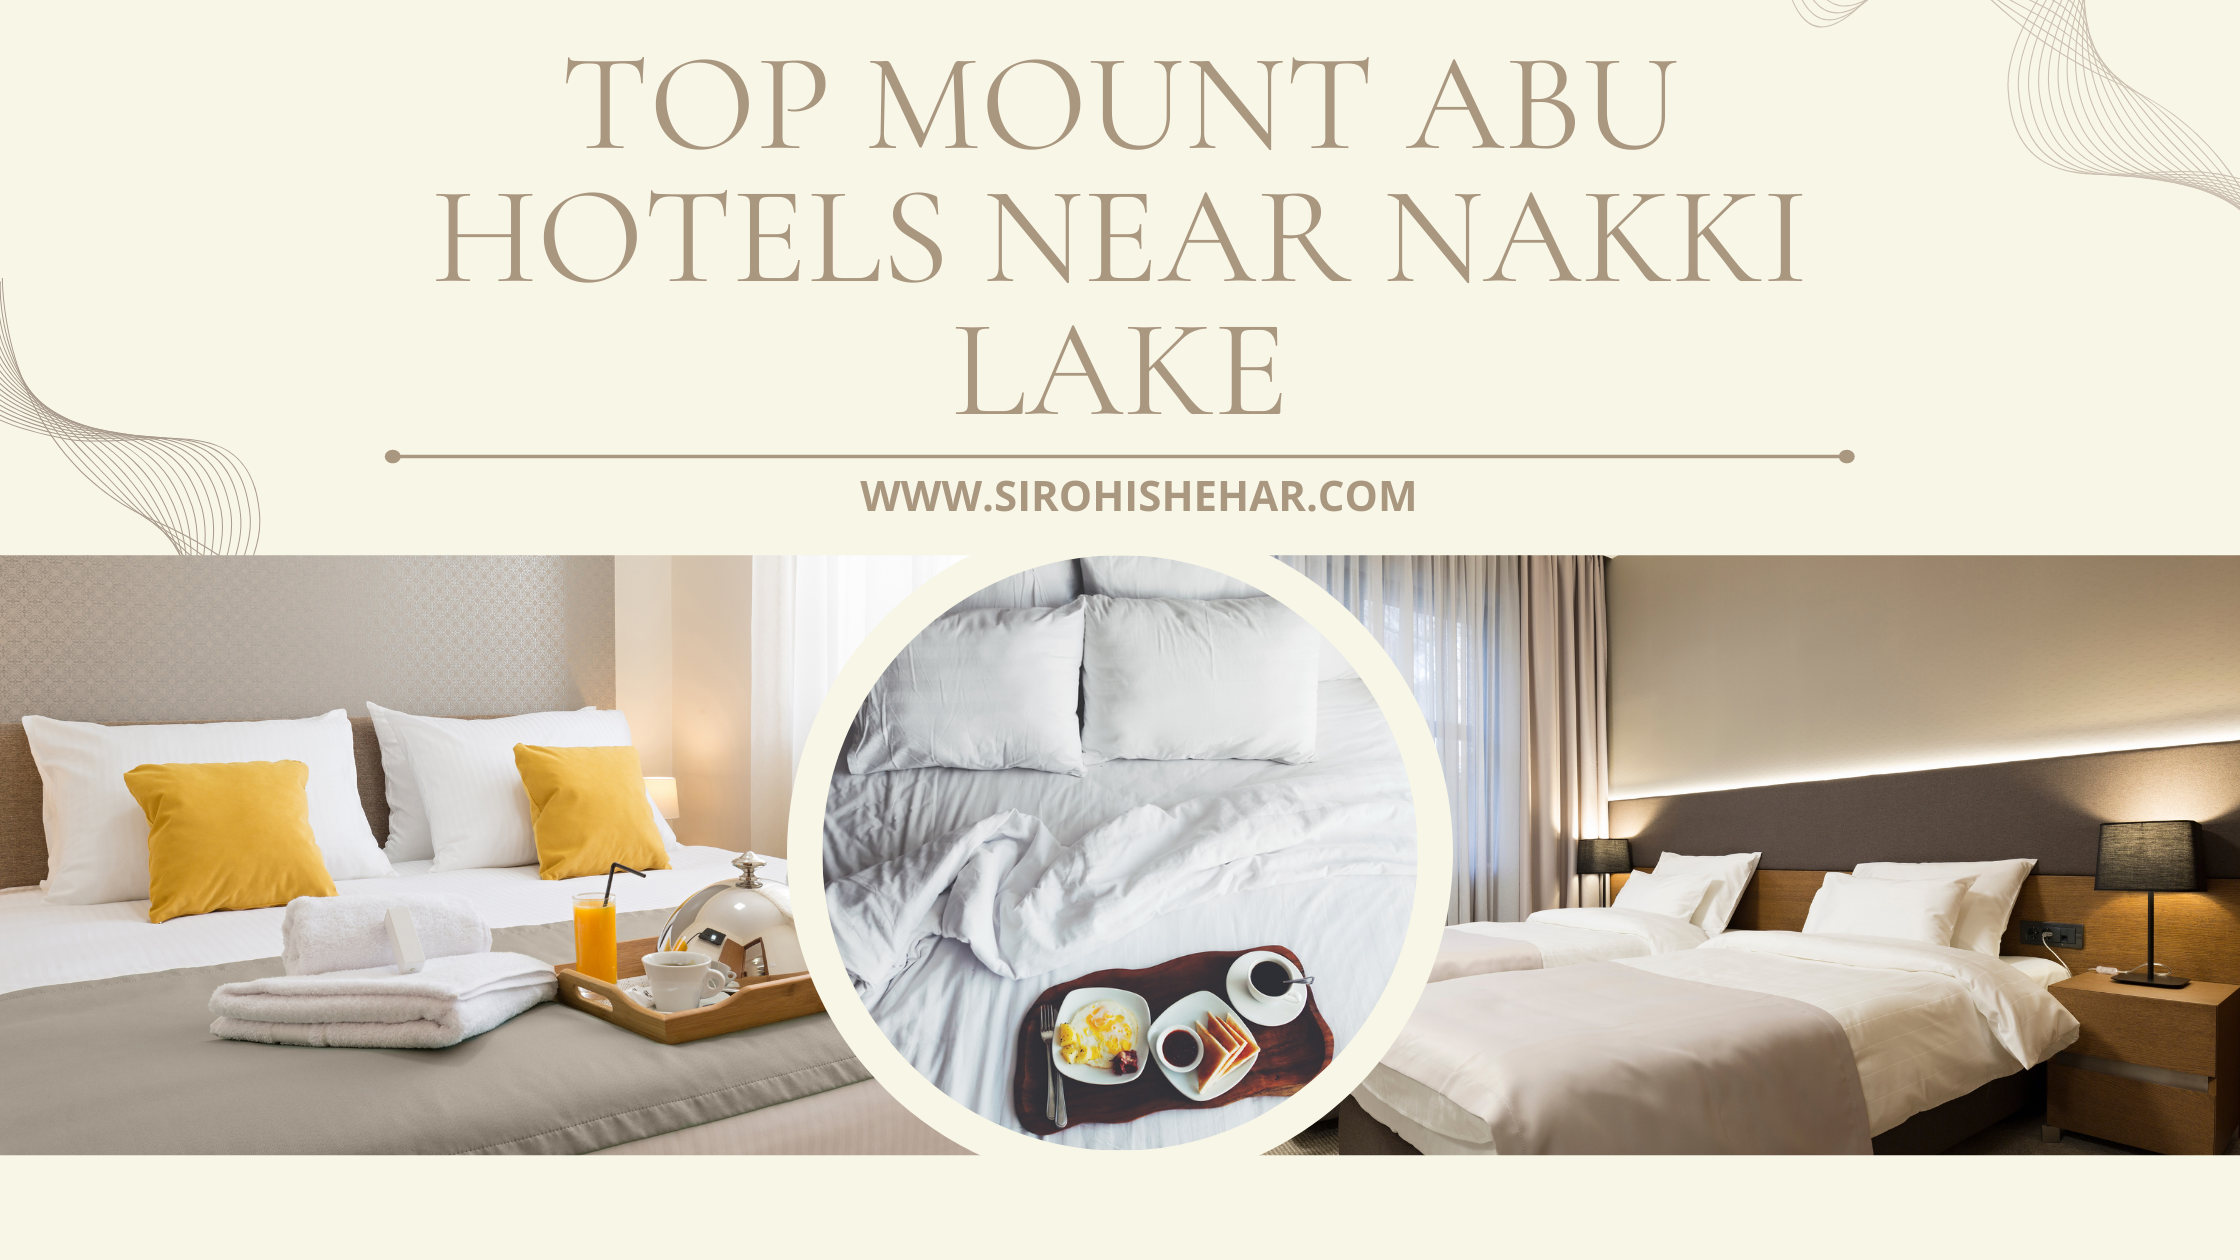 Top Mount Abu Hotels Near Nakki Lake You Should Consider Staying